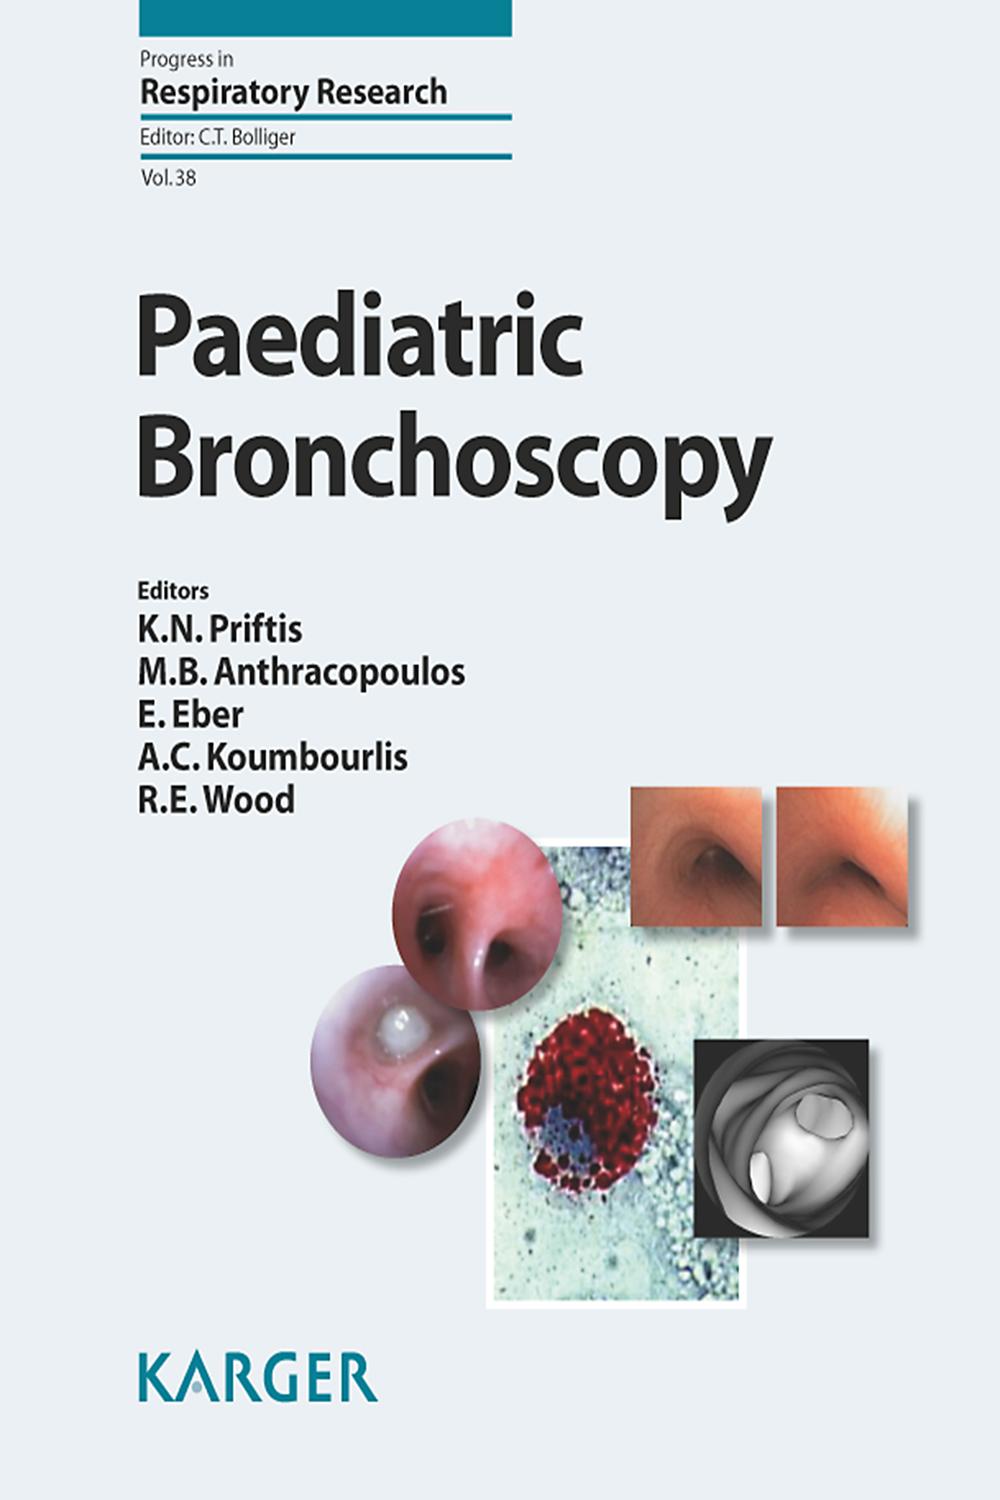 Paediatric Bronchoscopy - K. N. Priftis, M. B. Anthracopoulos, E. Eber, A. C. Koumbourlis, R. E. Wood